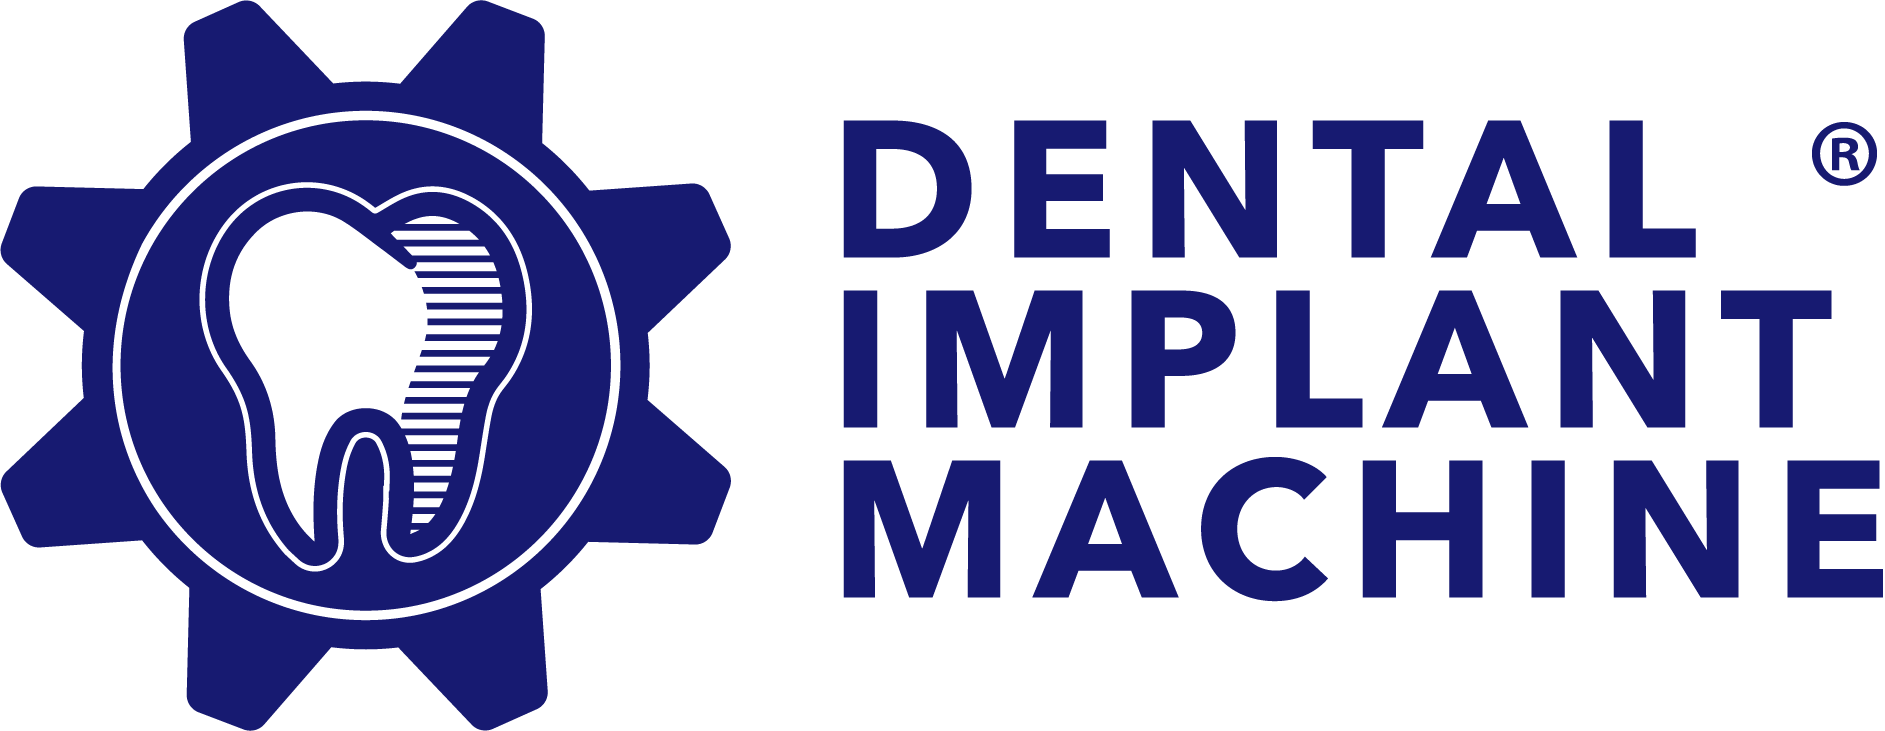 Dental Implant Machine logo